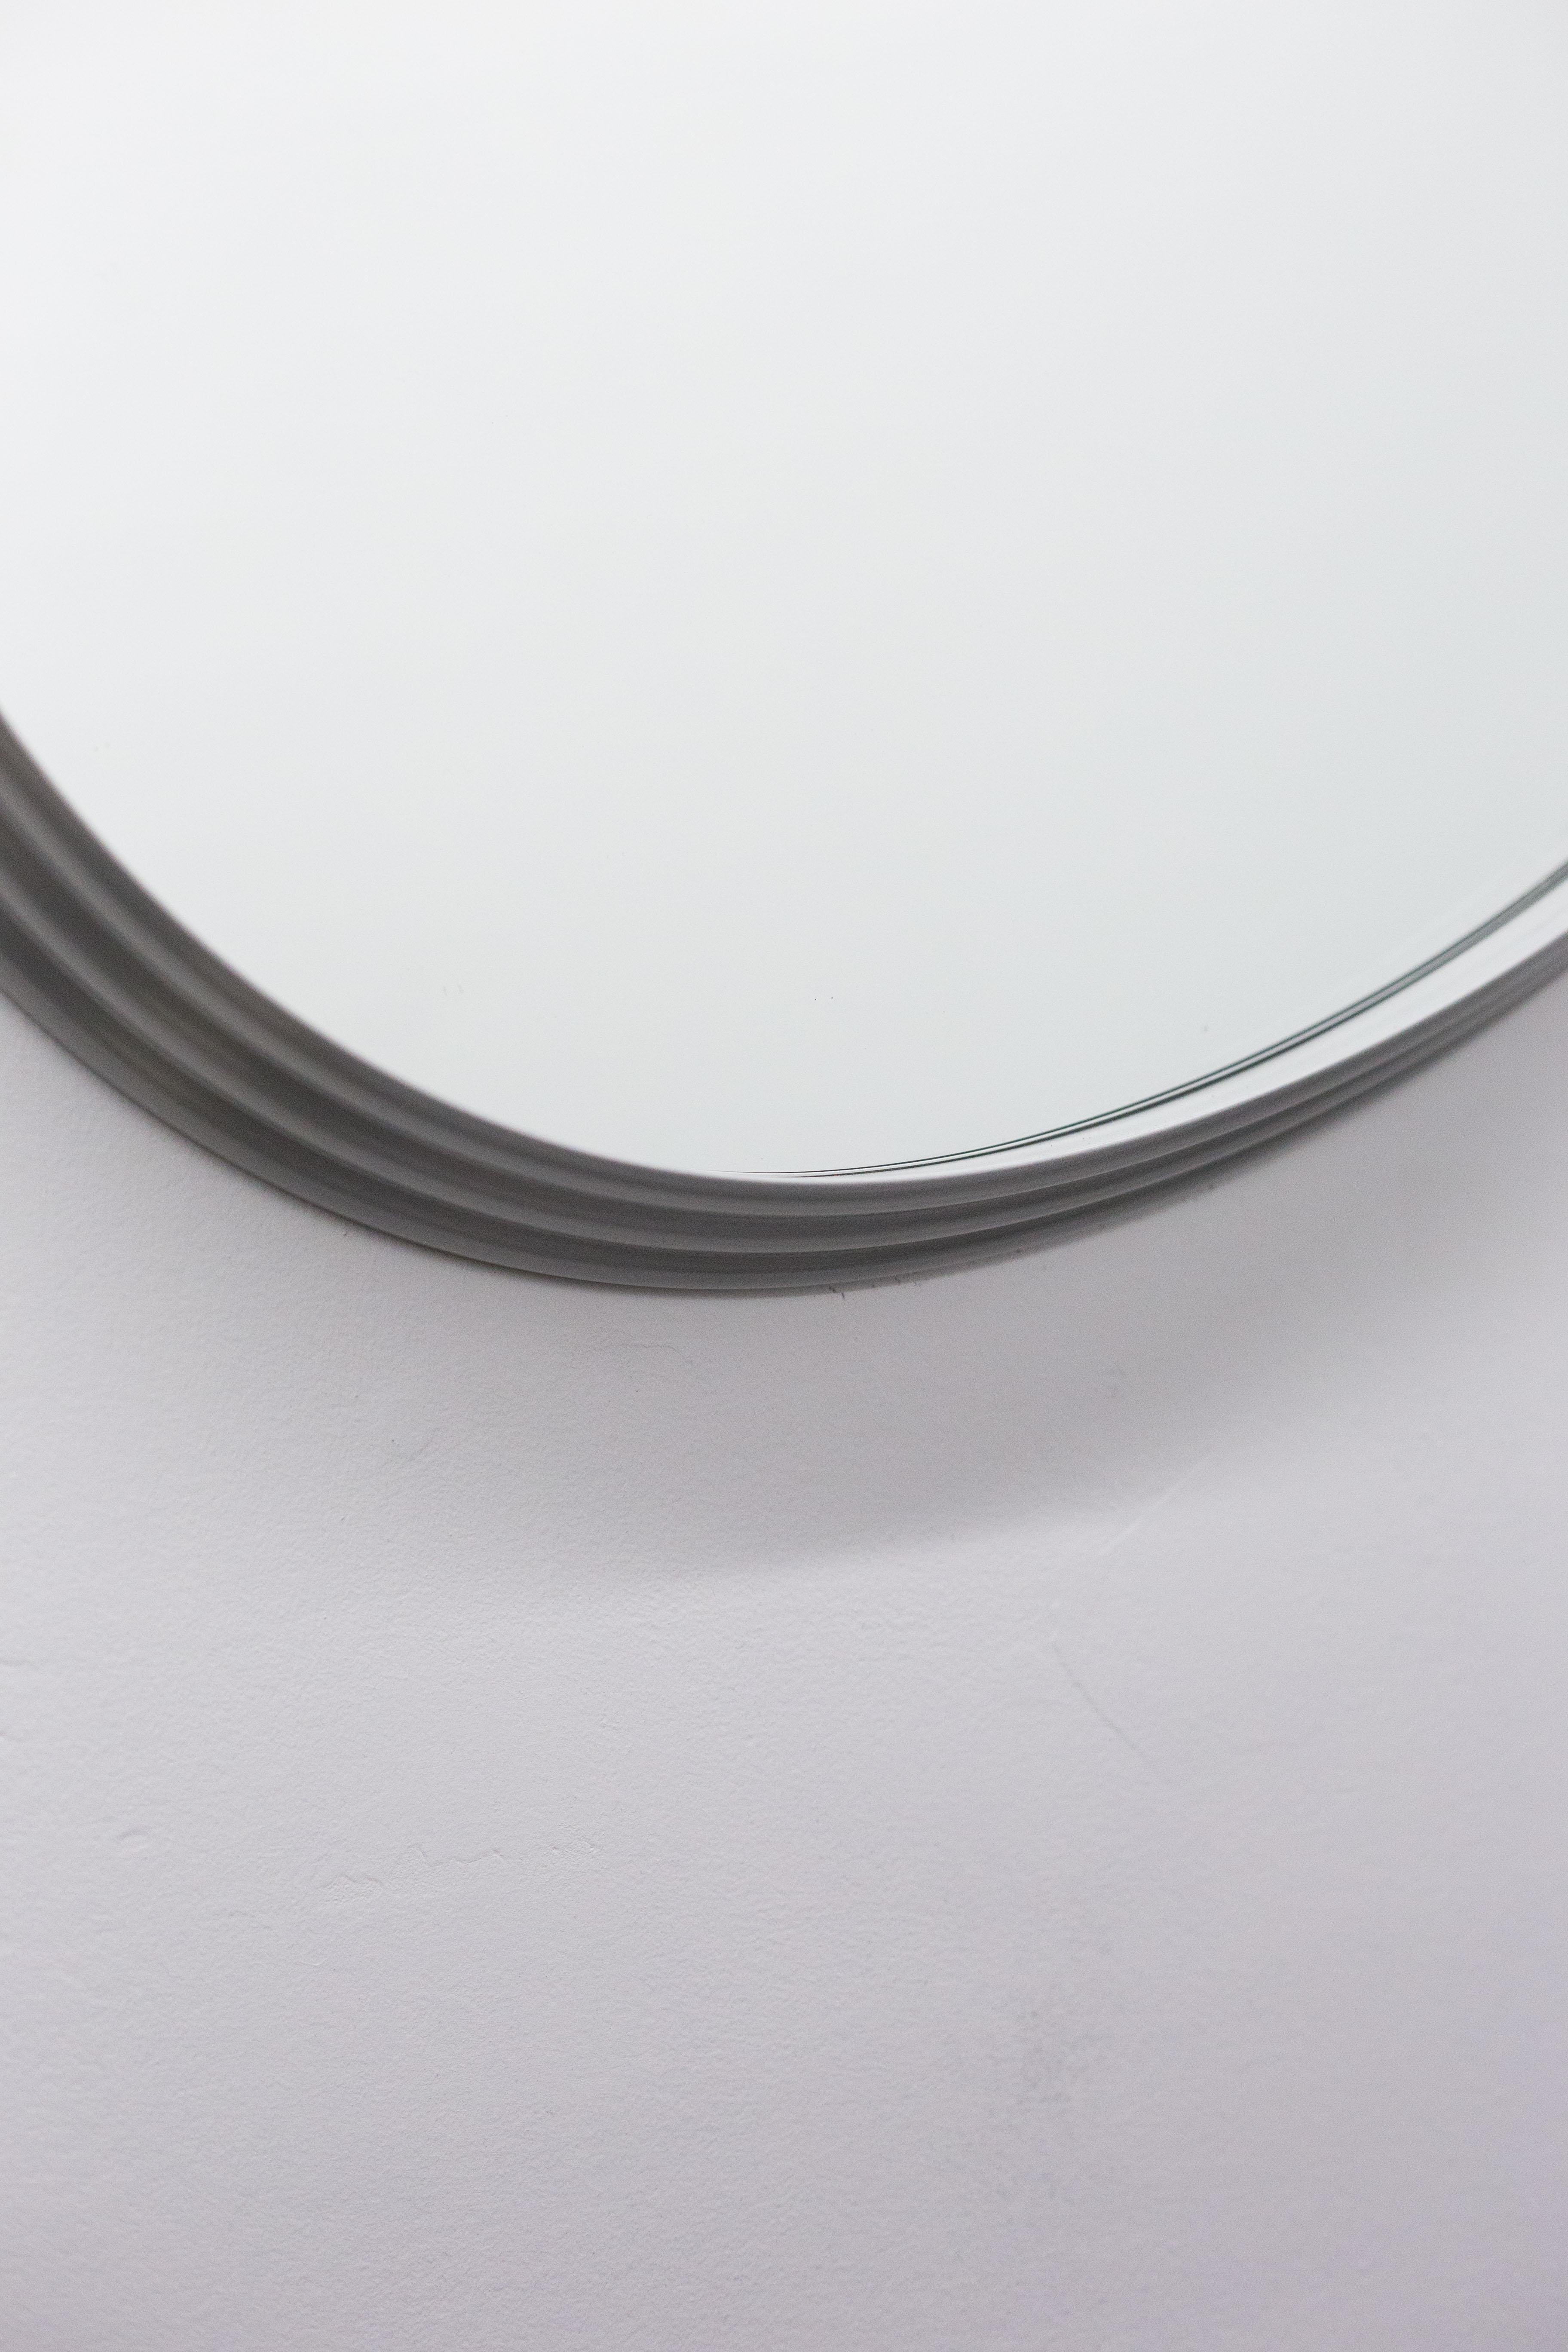 Sweep Wall Mirror in Burgundy Aluminium  For Sale 1